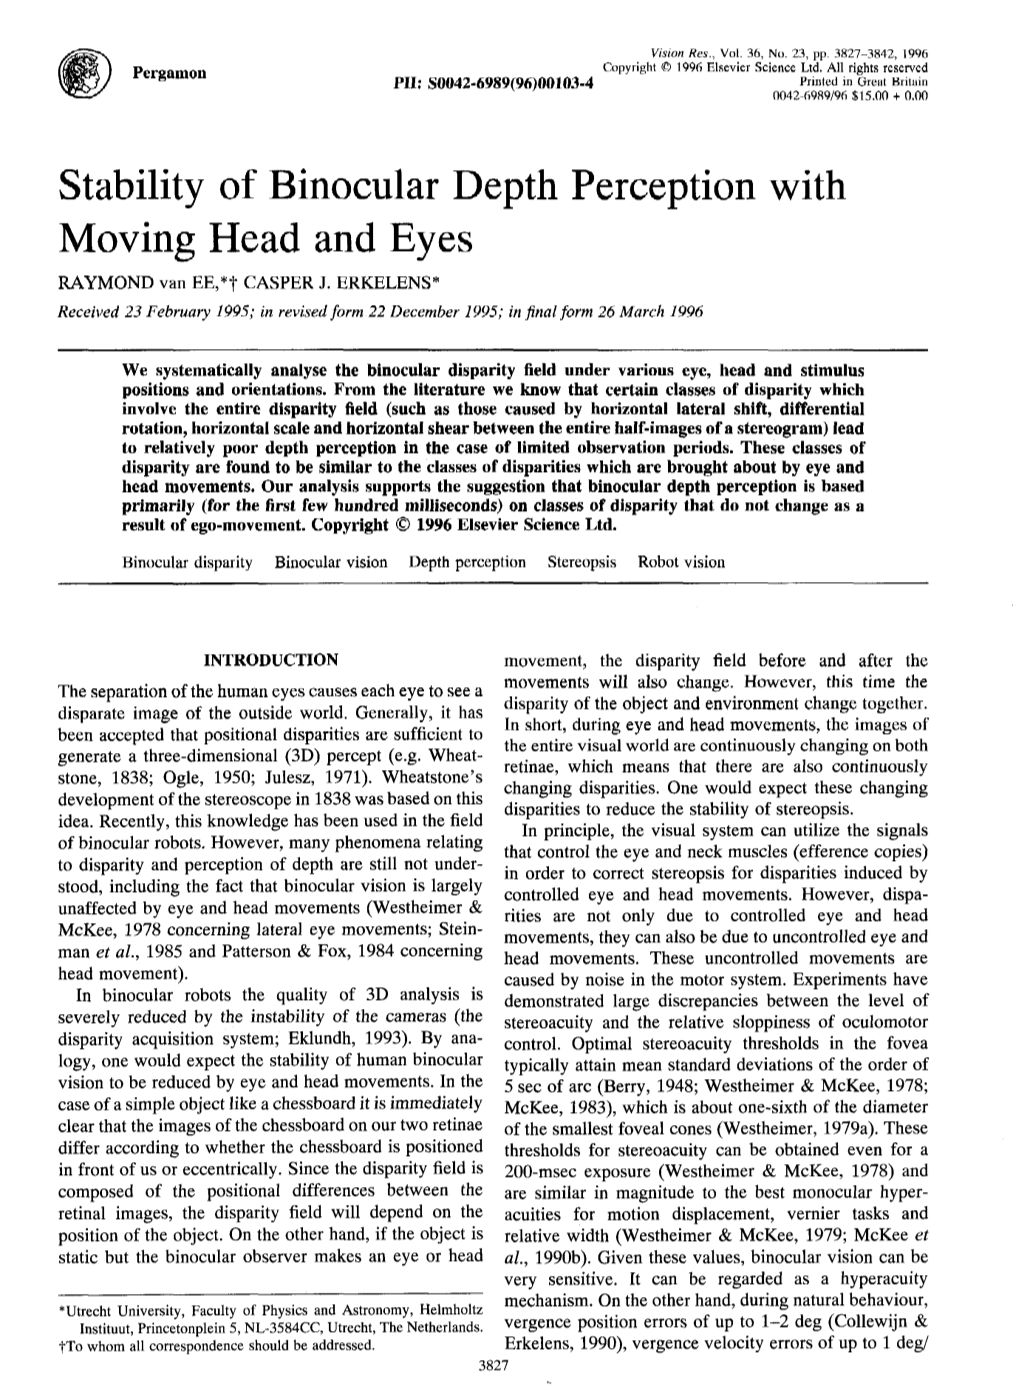 Van Ee (1996) Stability of Binocular Depth Perception with Moving Head